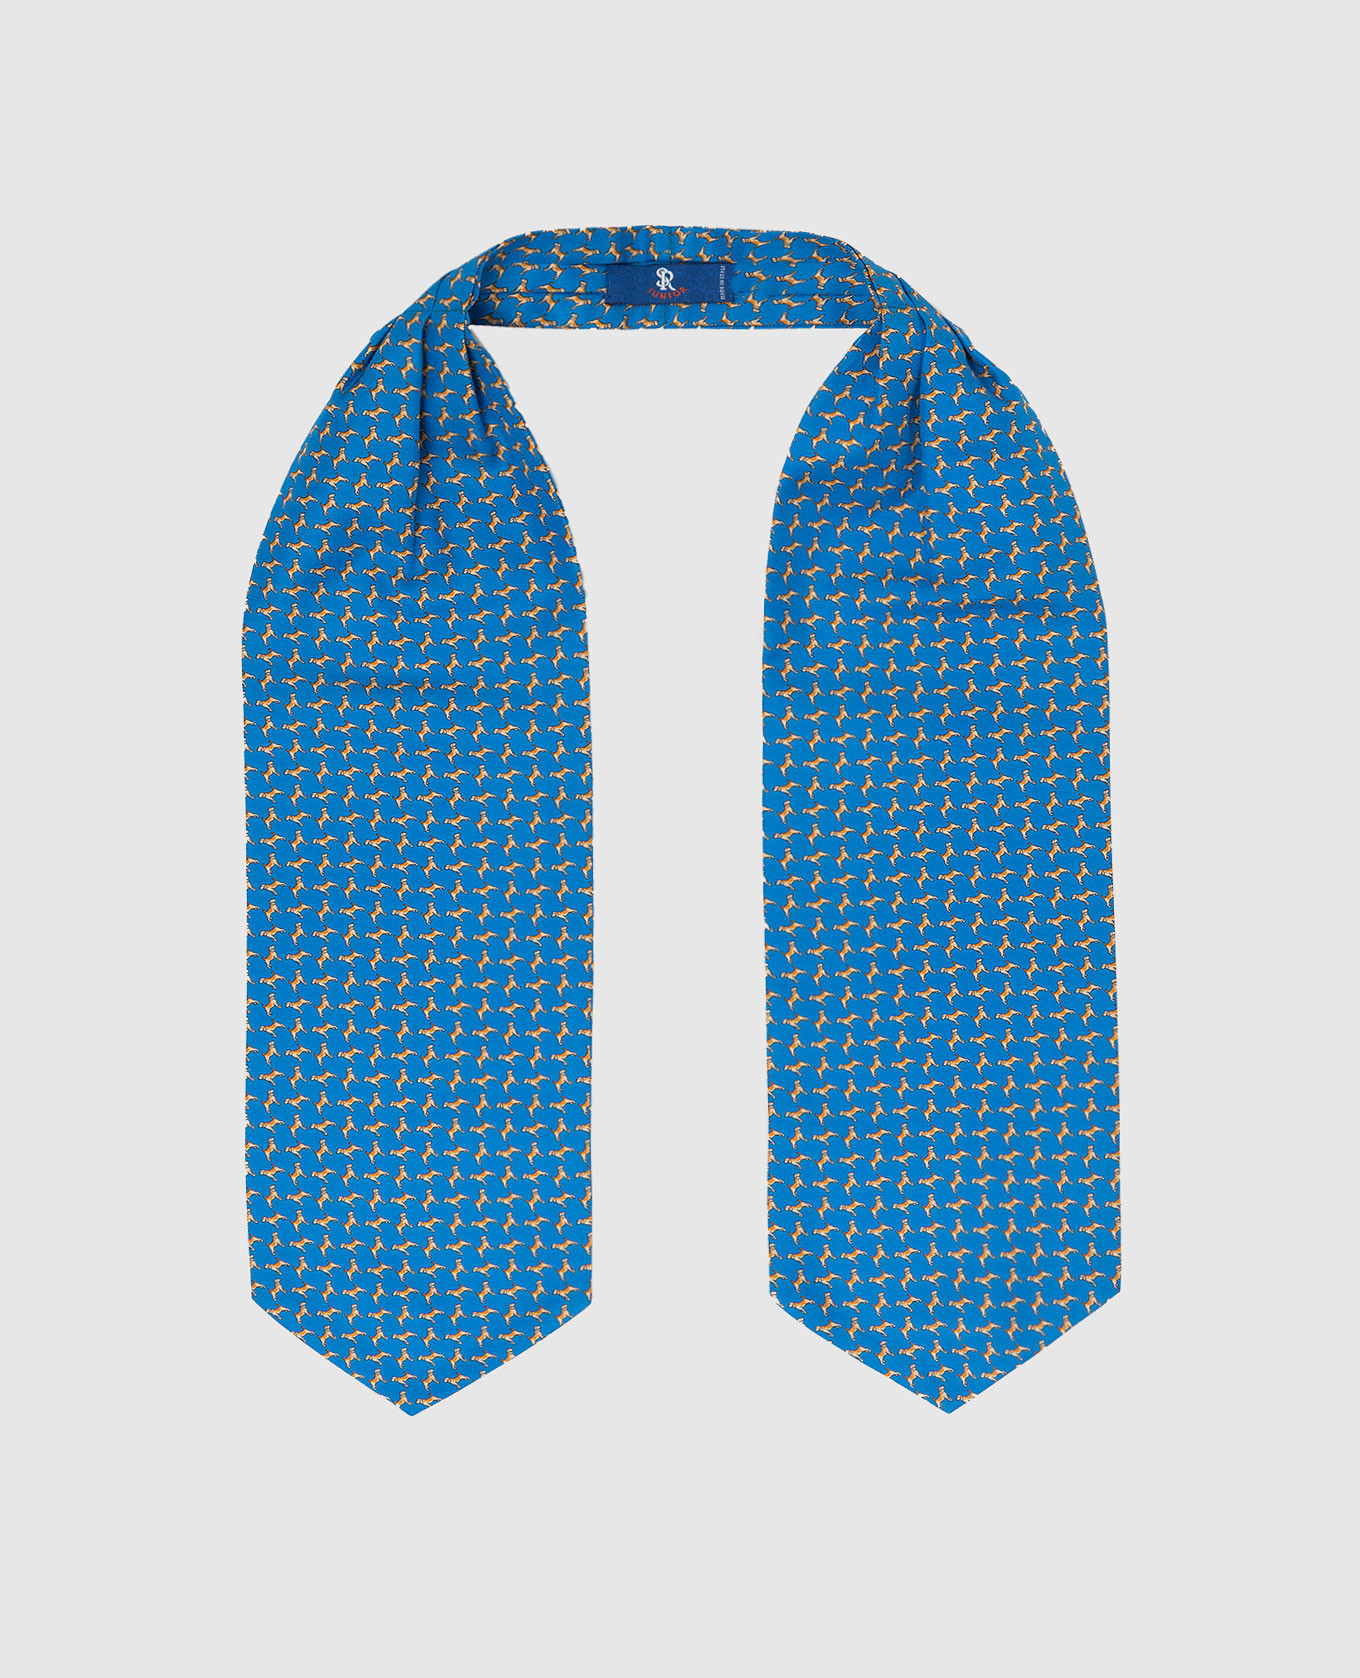 Children's blue silk ascot tie in a pattern